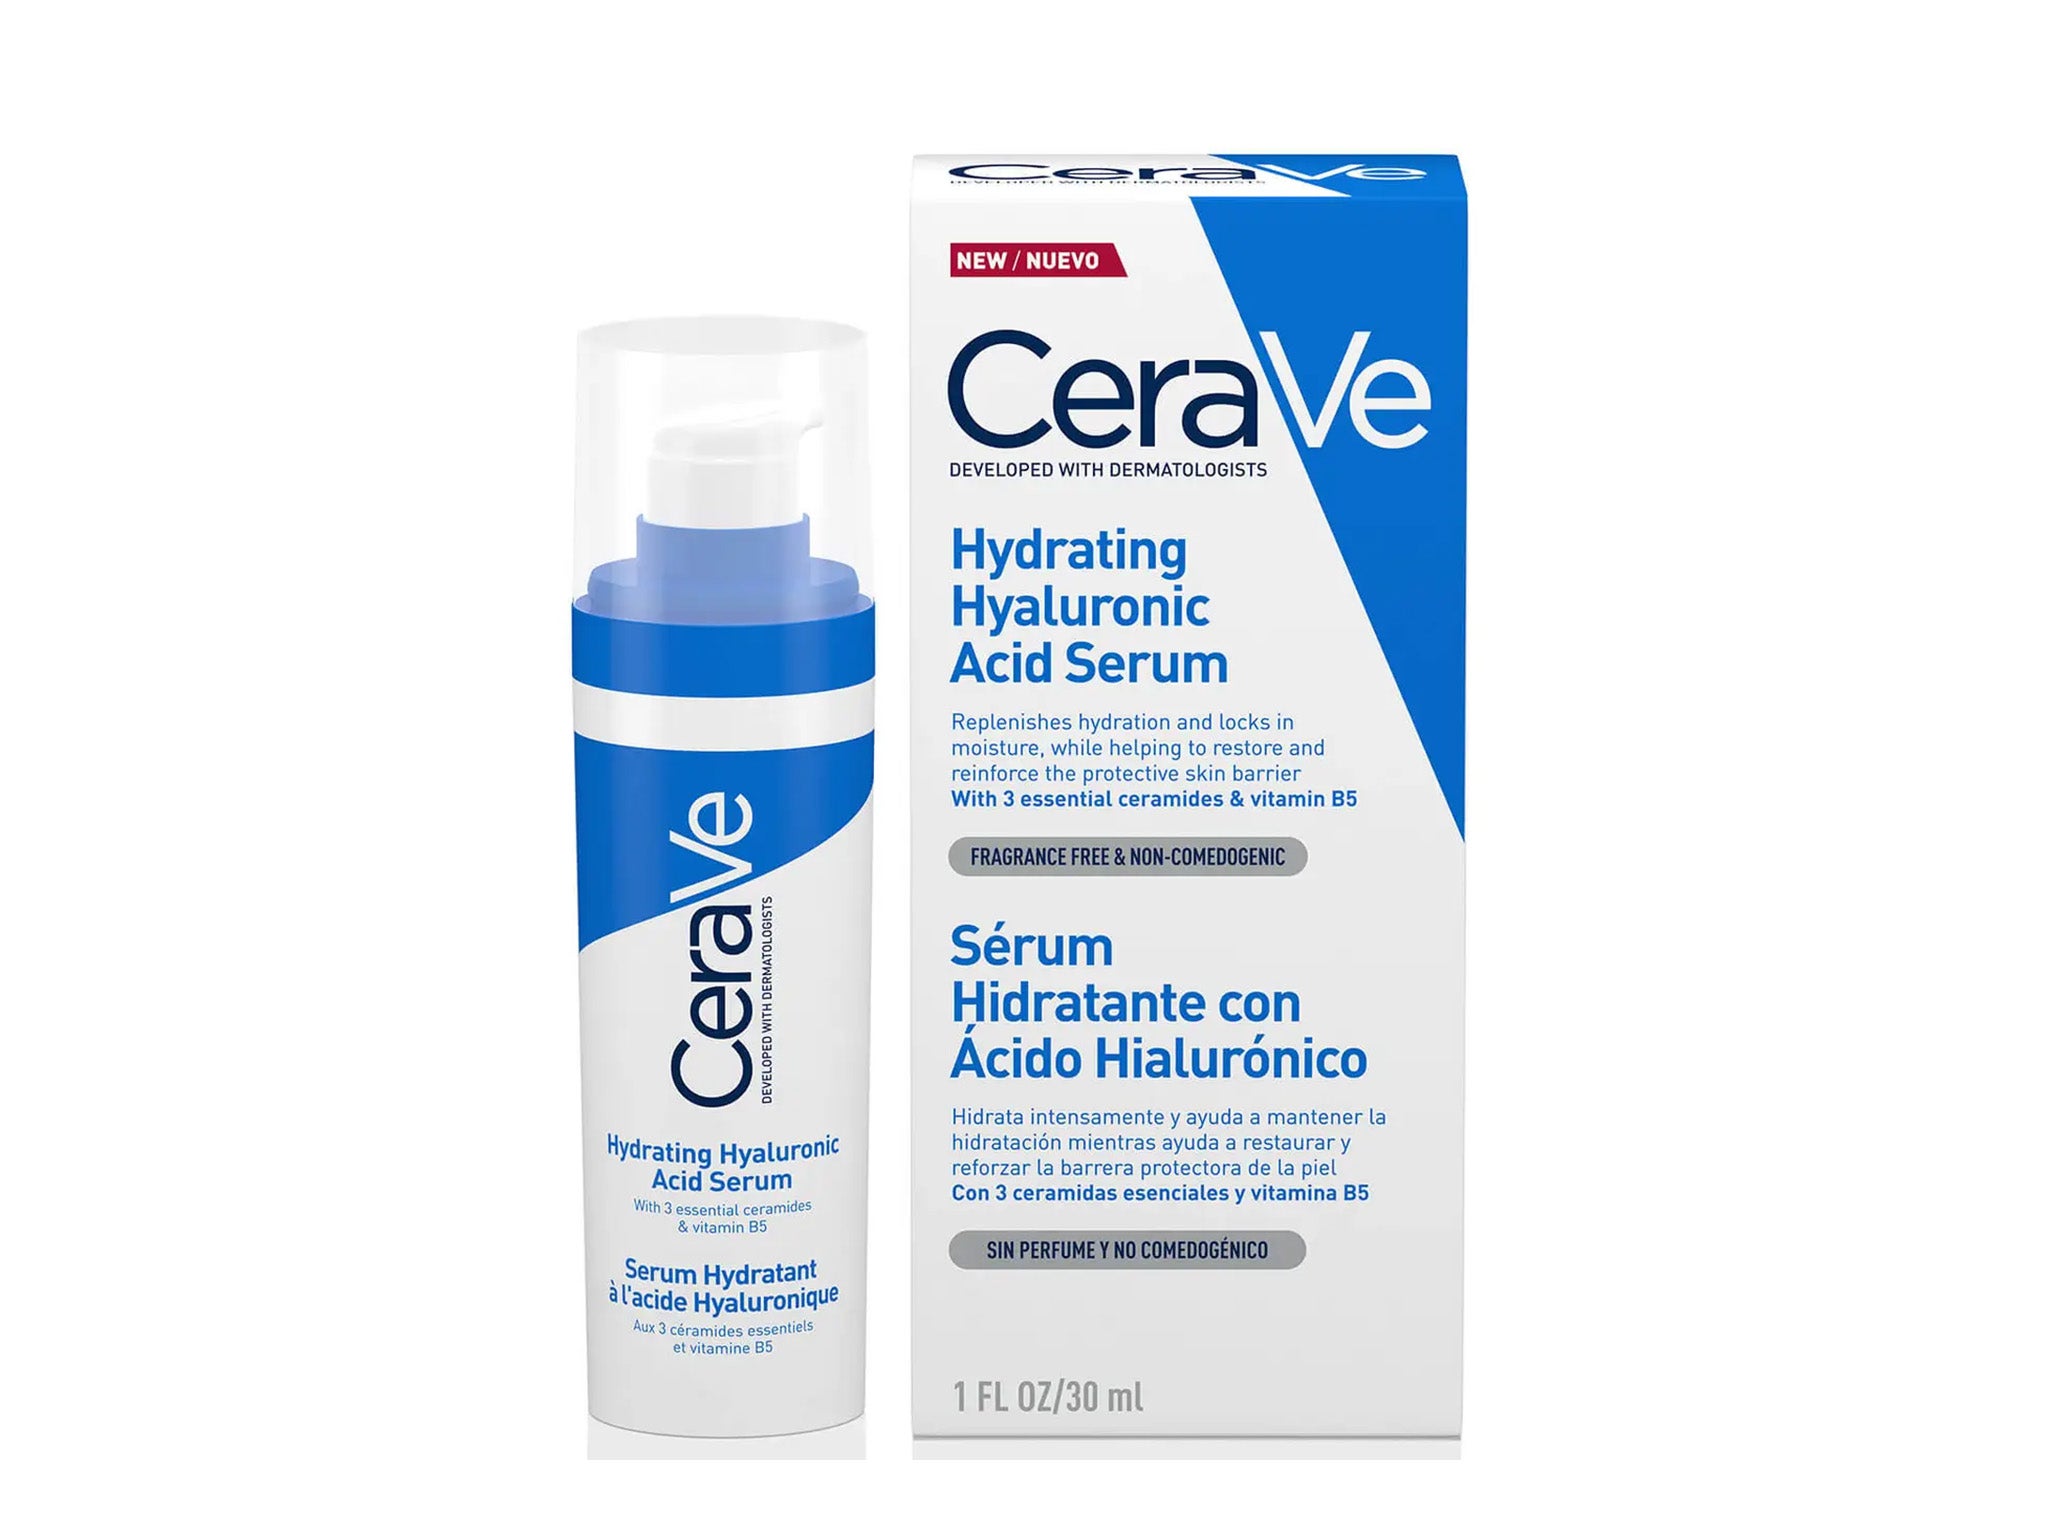 CeraVe hydrating hyaluronic acid serum